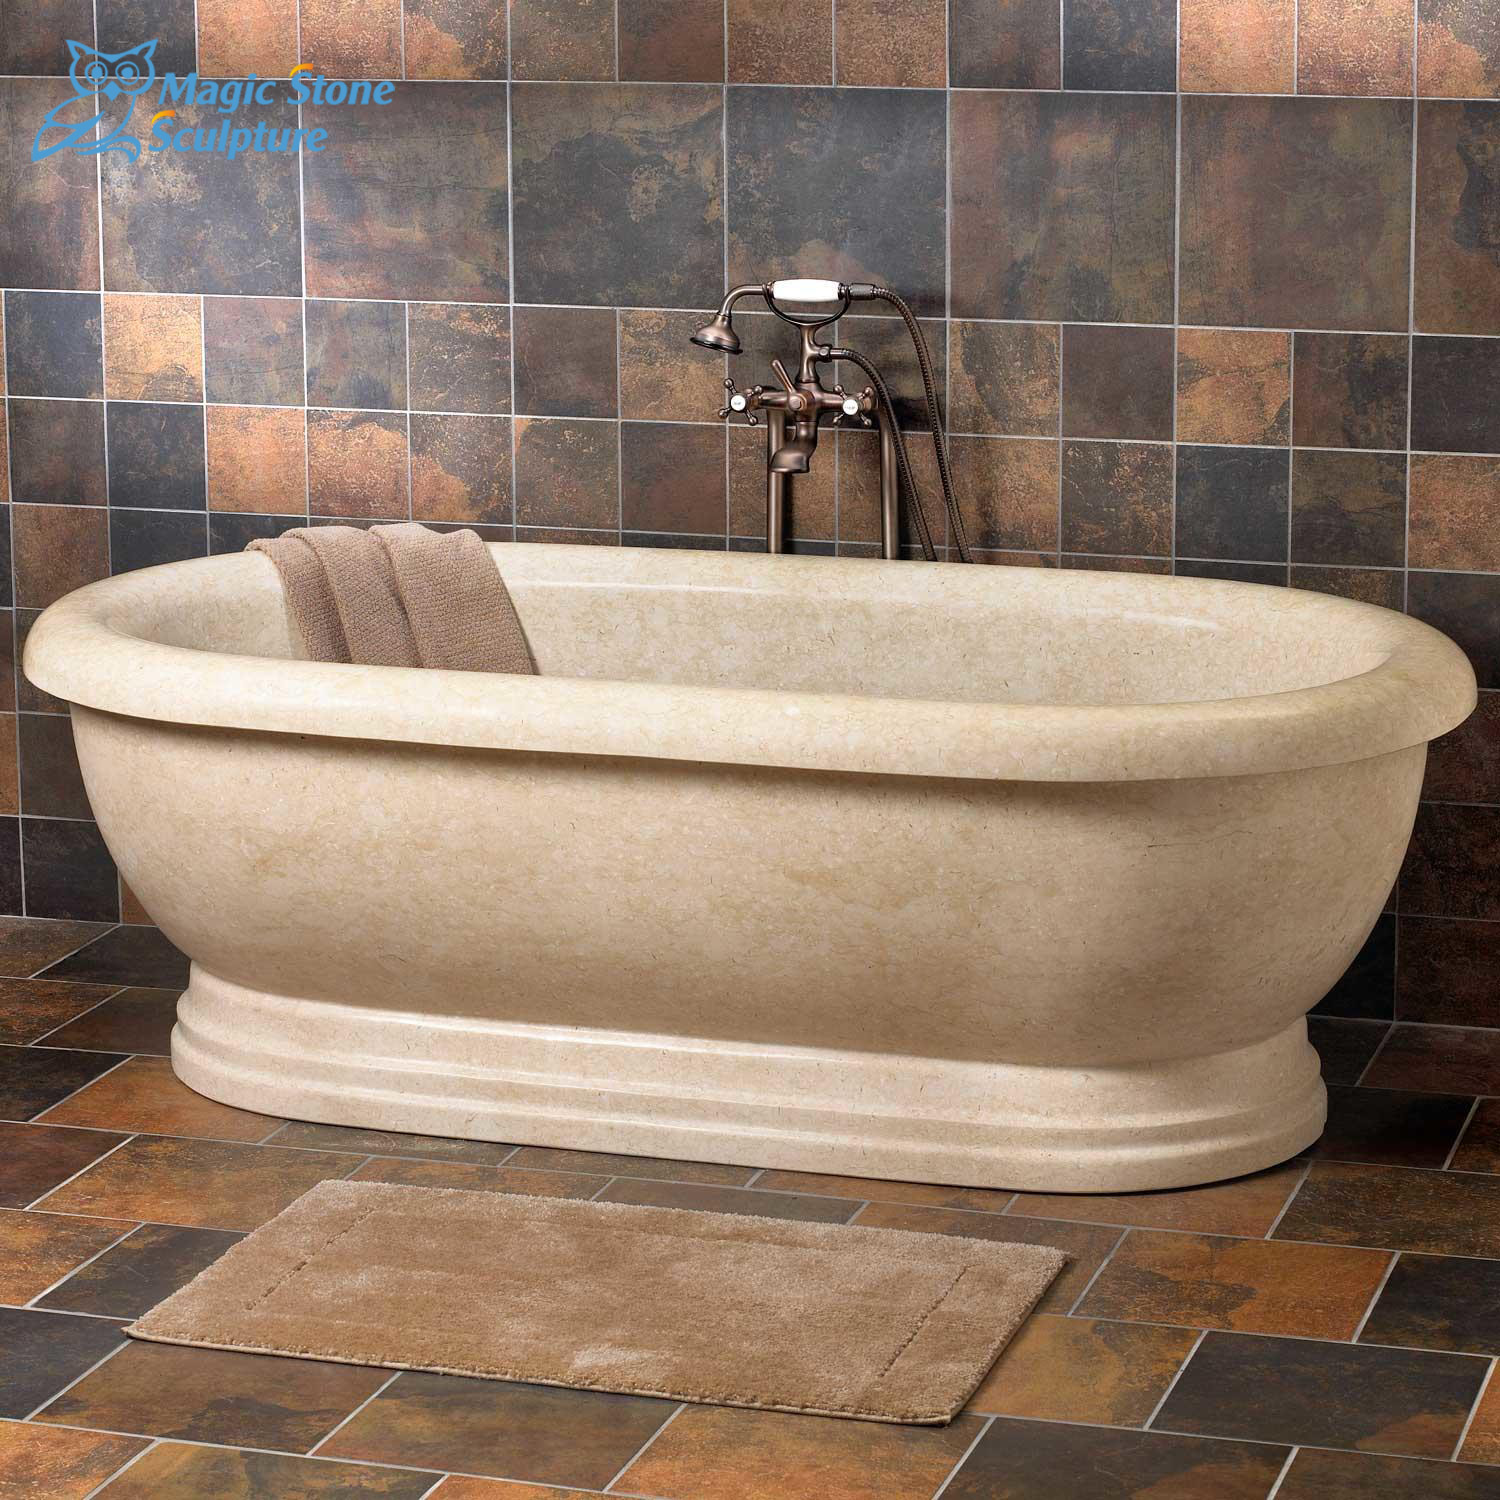 1601-0179freestanding marble stone bathtub